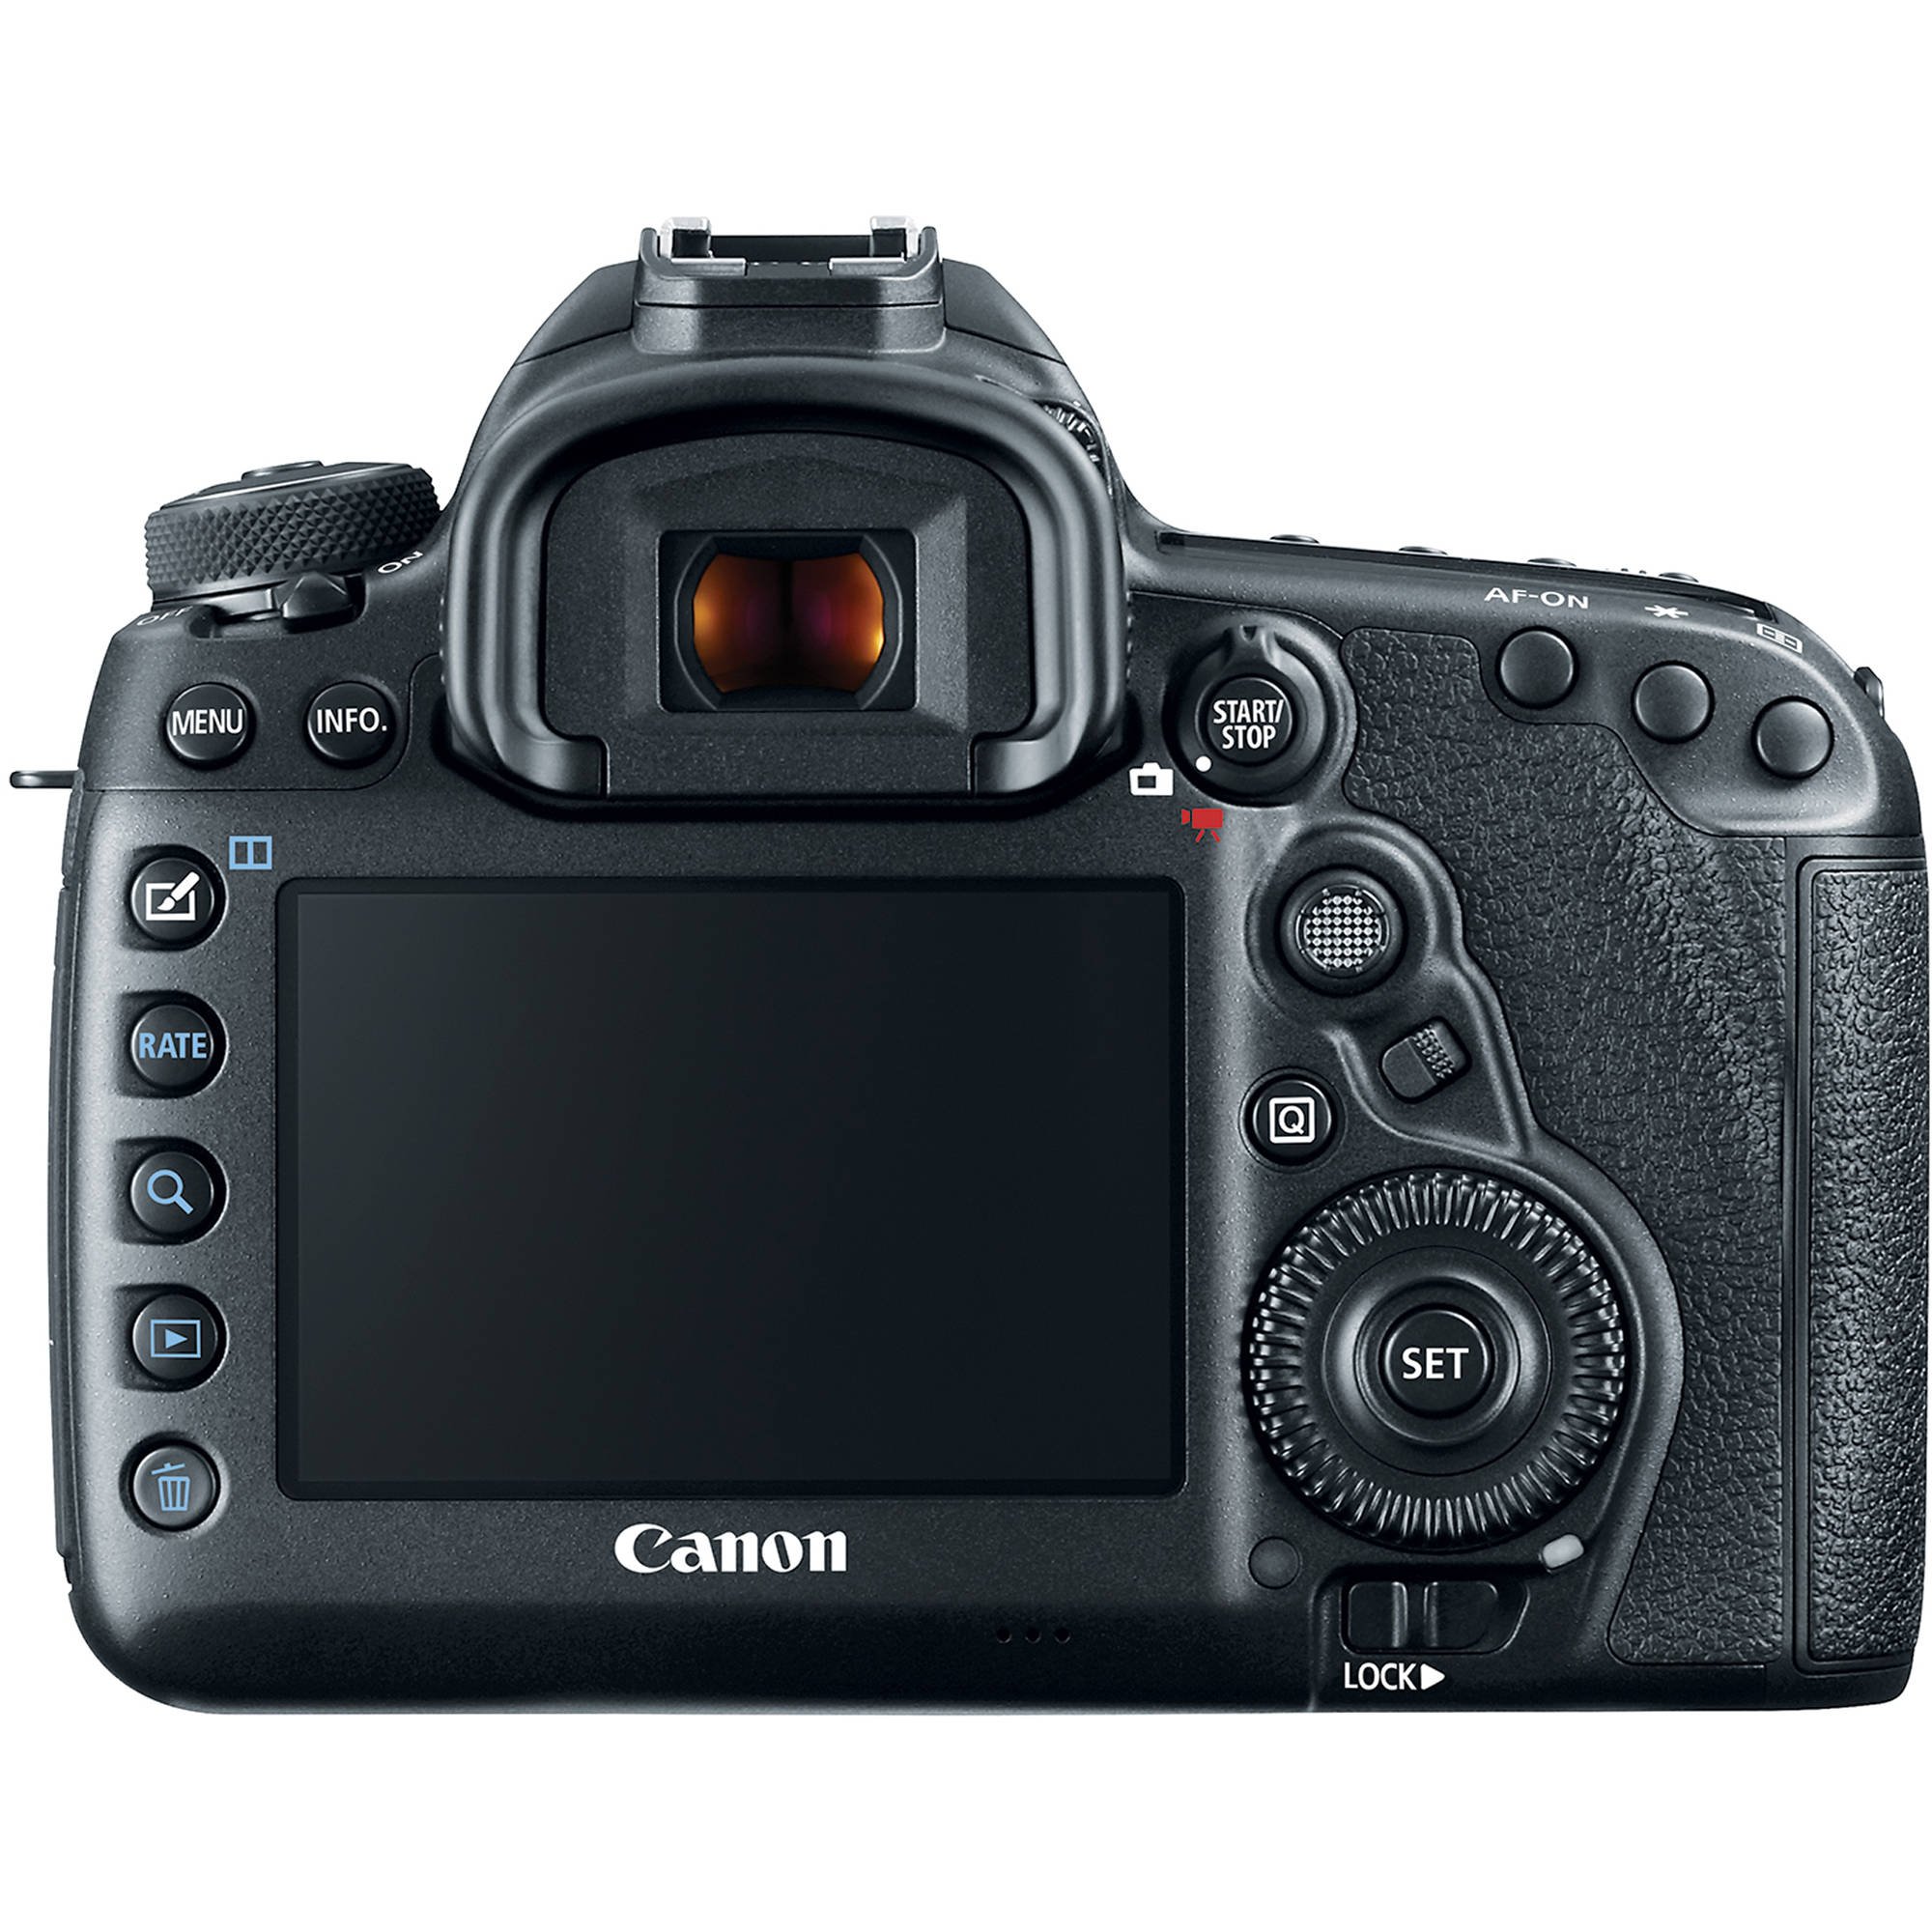 Canon EOS 5D Mark IV 30.4 MP DSLR Full Frame Camera Body with EF 50mm F1.8 STM Lens + EF 75-300mm F4-5.6 III Lens Kit Pro Travel Bundle